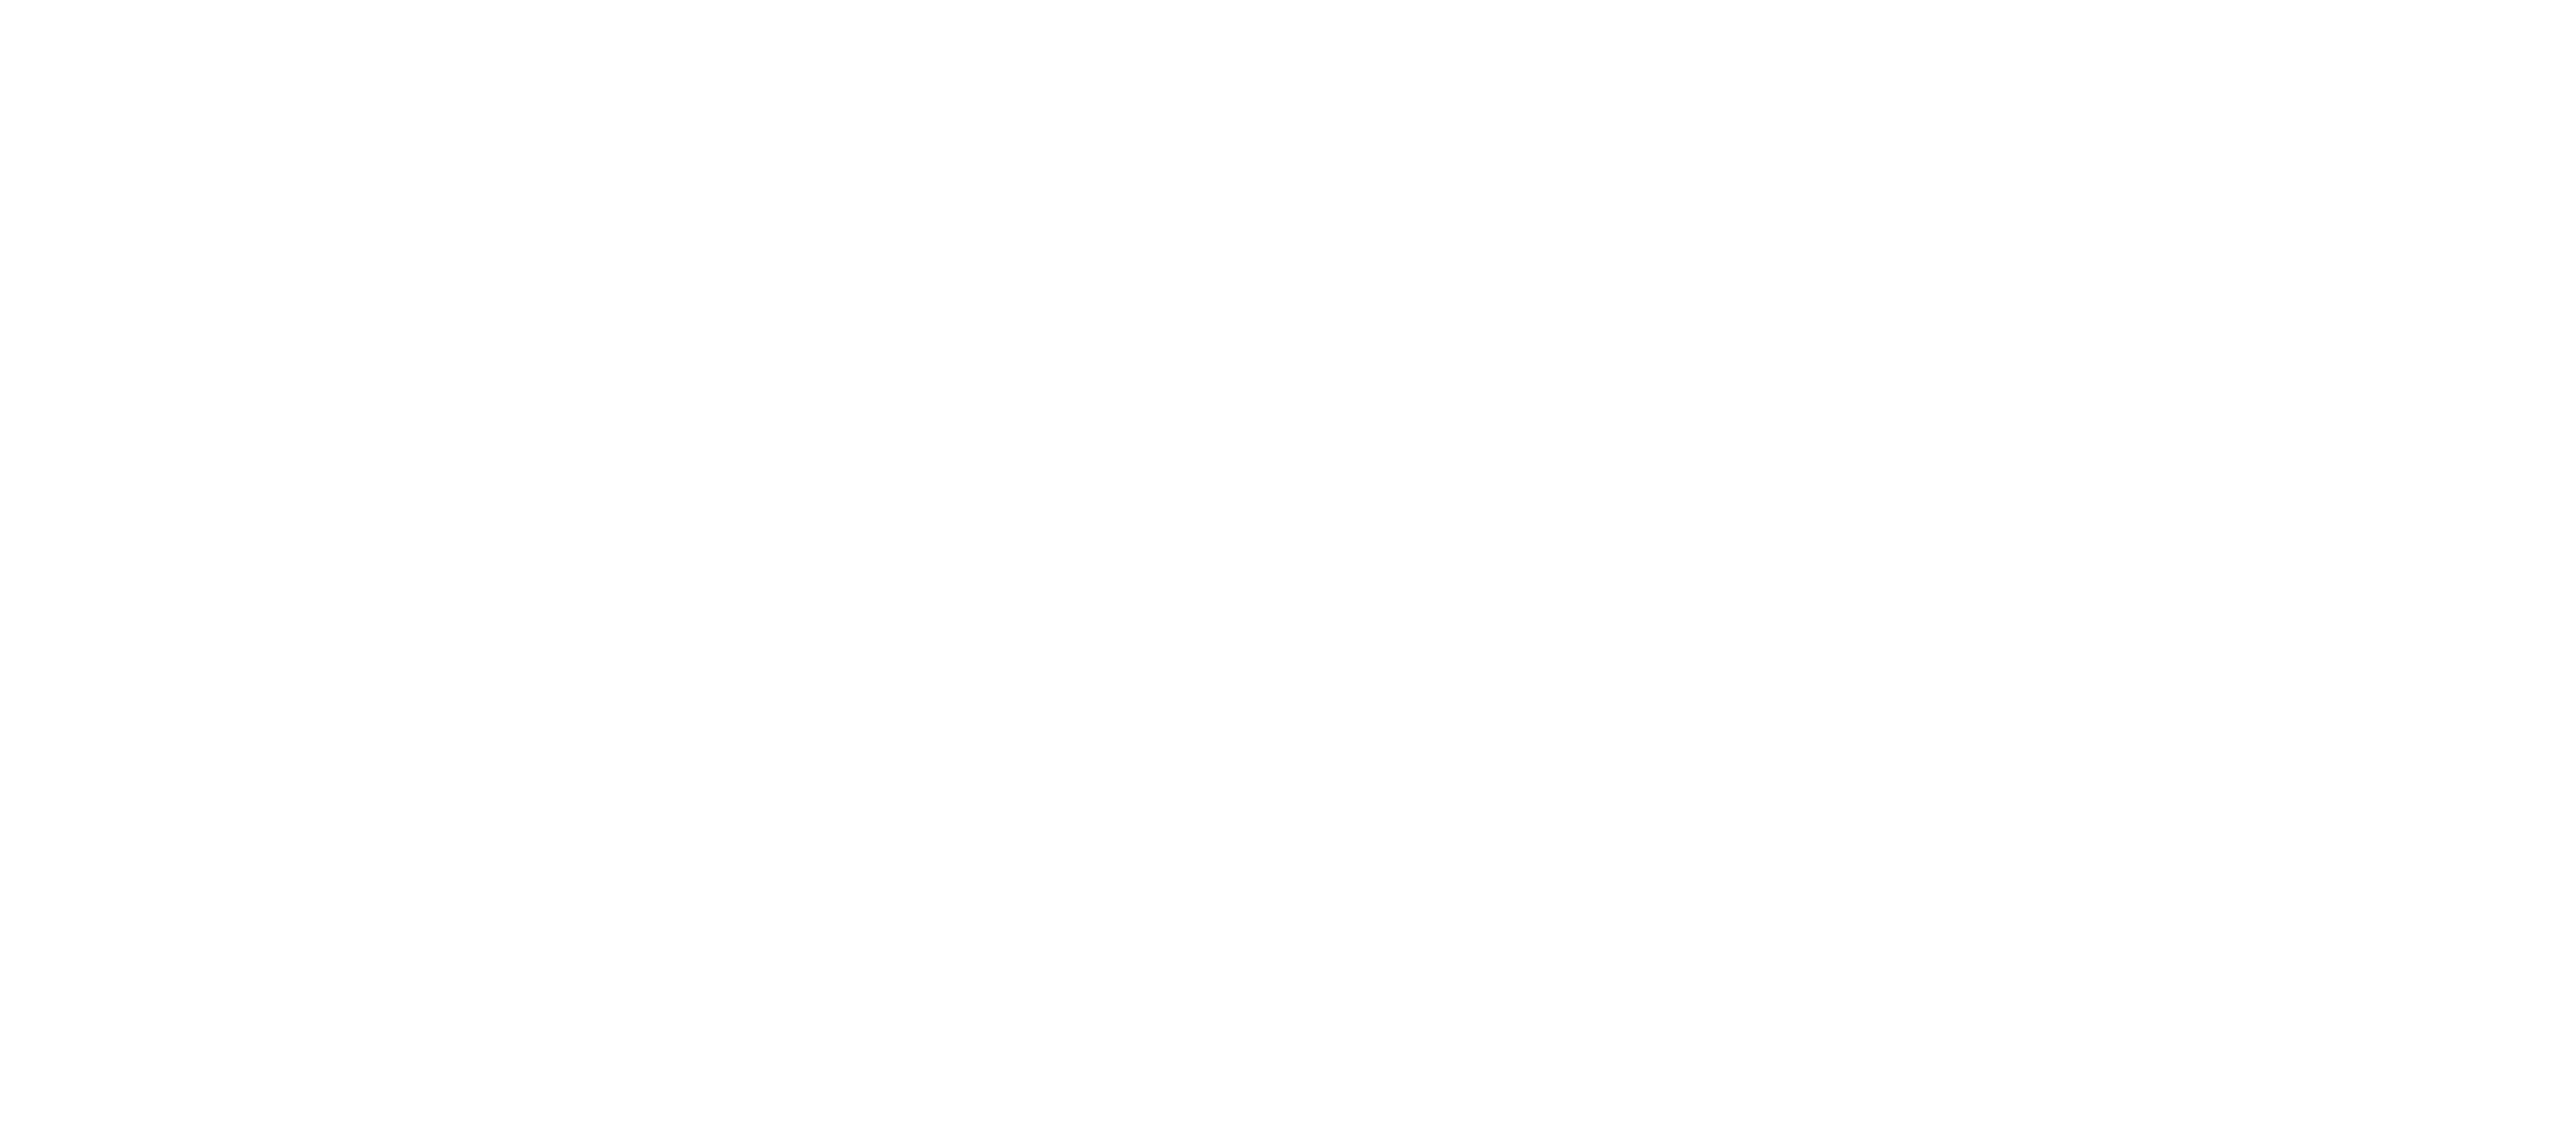 En jäkla massa schlager logo